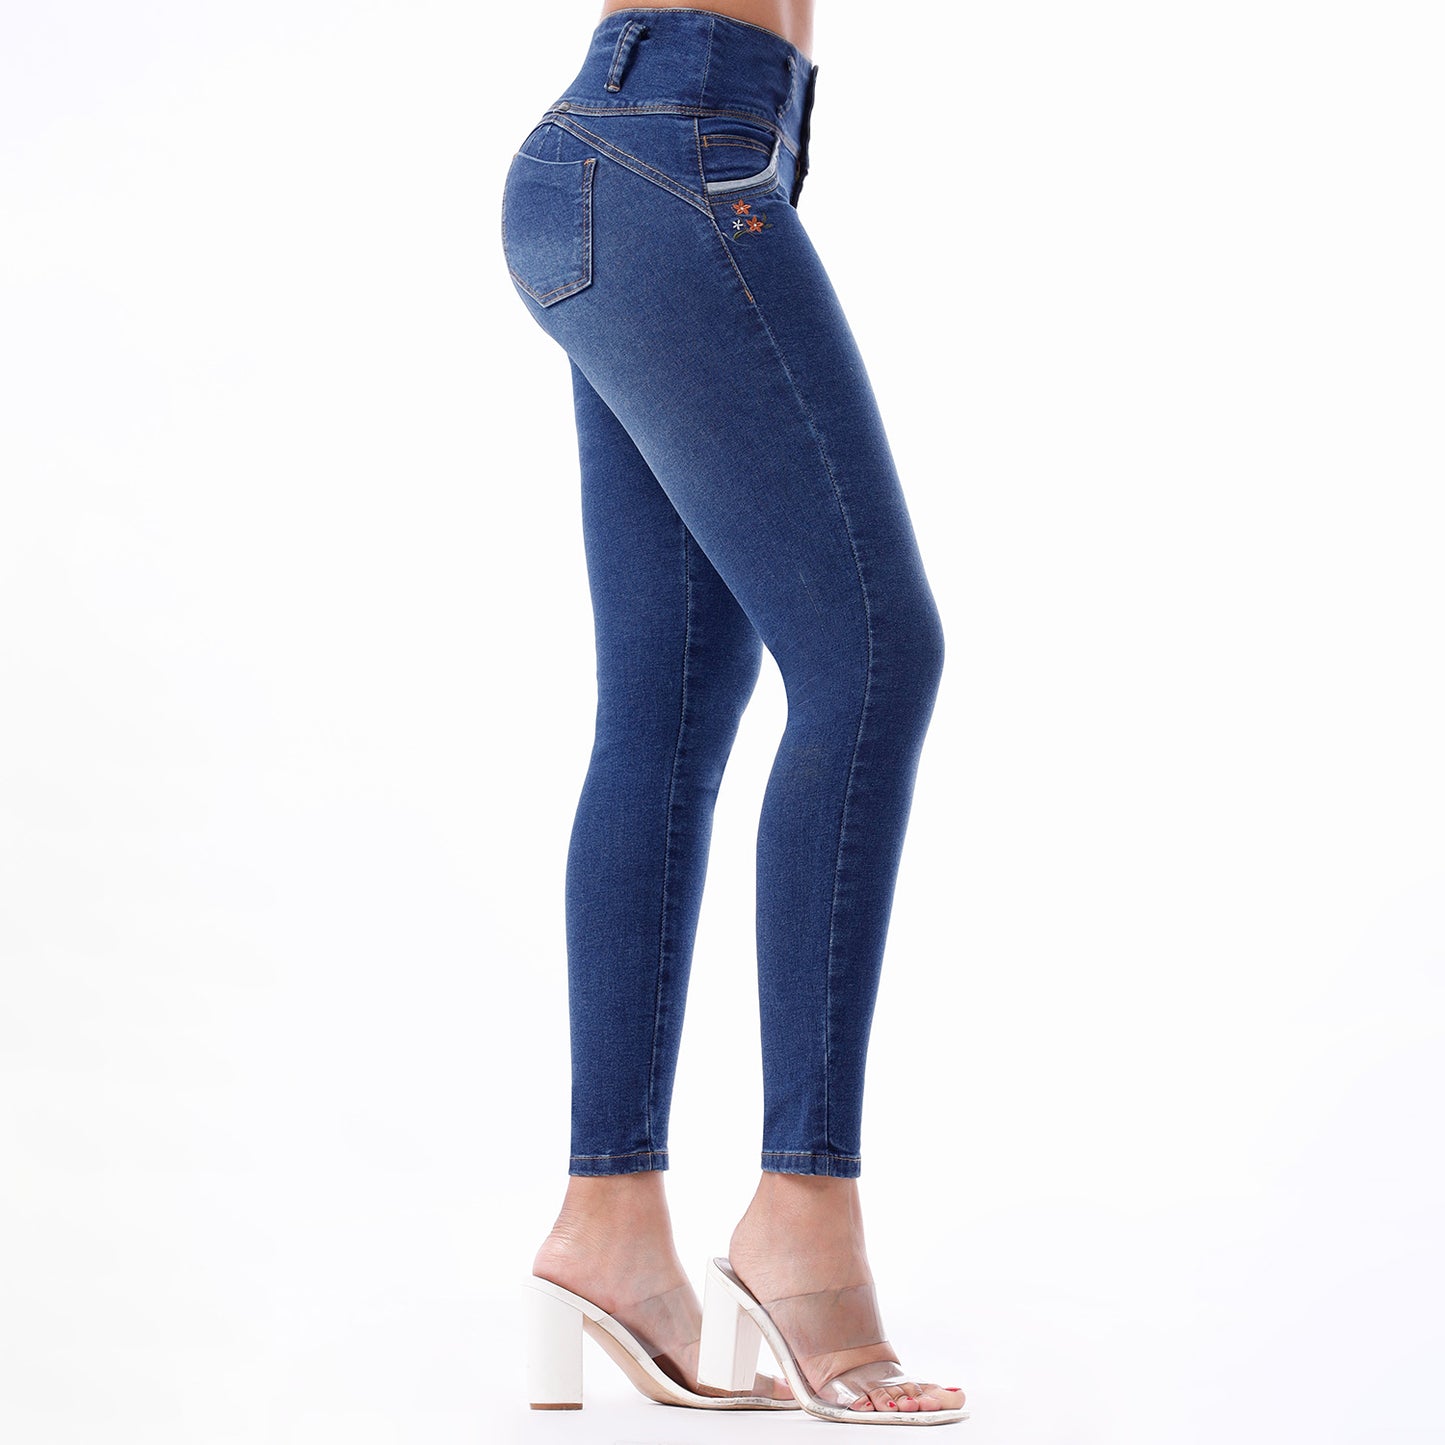 Jeans Push Up Mujer Semi Cadera Pitillo Pepper – 221446